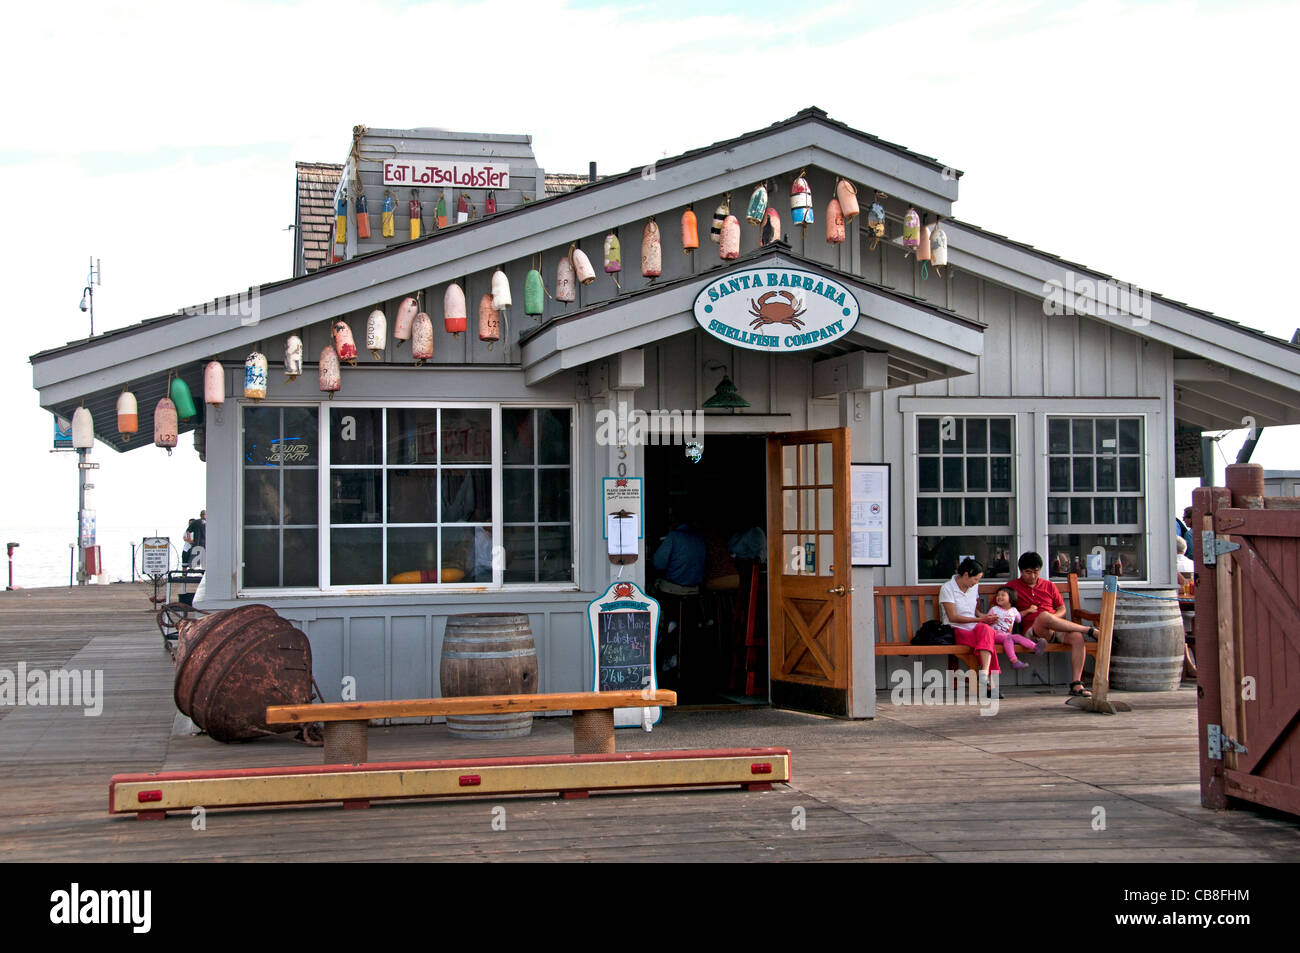 Stearns Wharf Pier restaurant plage de Santa Barbara en Californie United States Banque D'Images